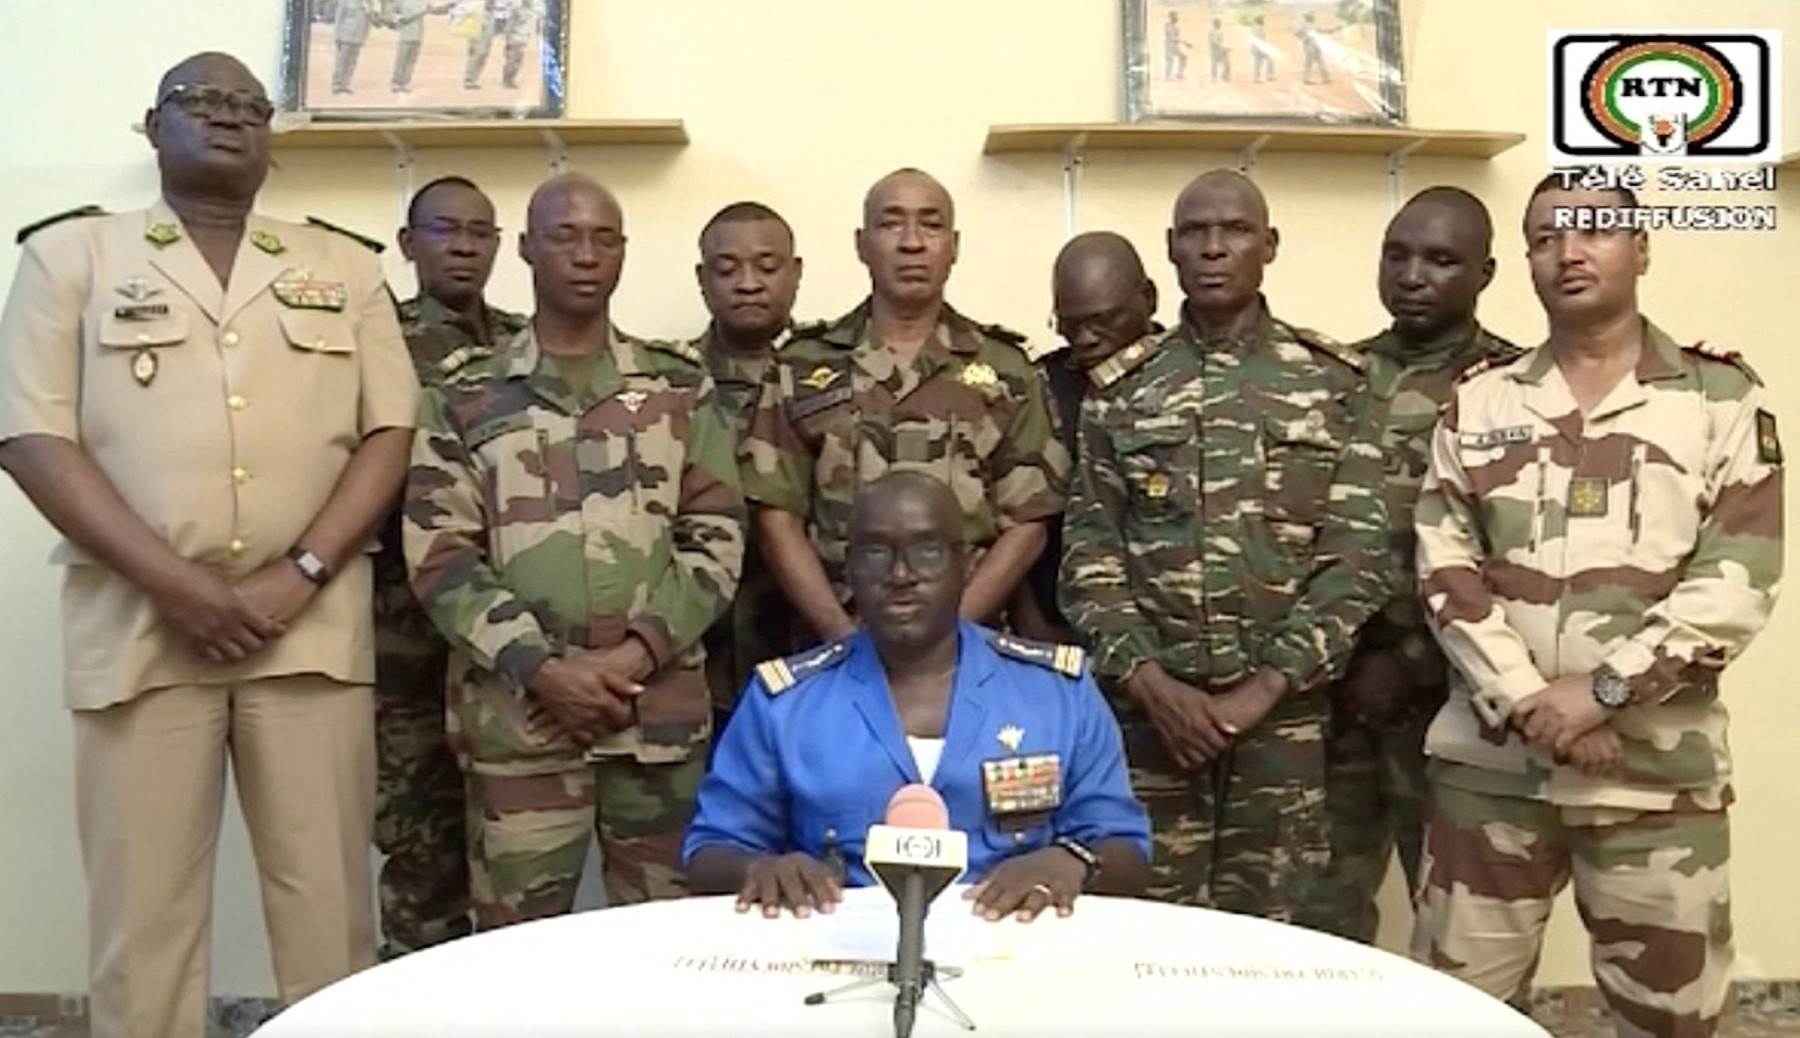  Niger_vojska objavljuje da je svrgnula predsjednika 